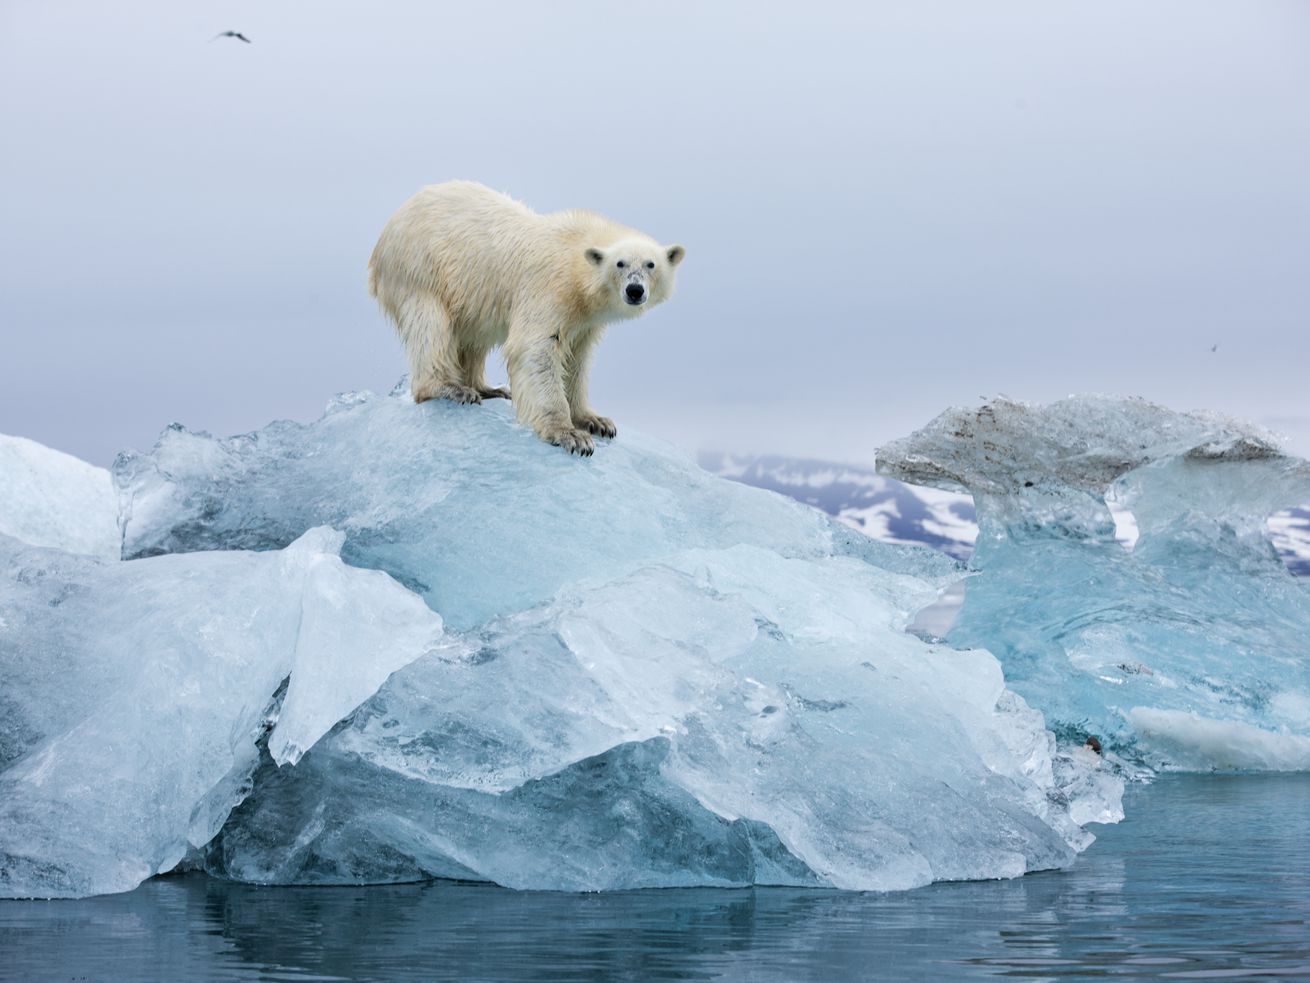 A teensy, tiny glimmer of hope for polar bears